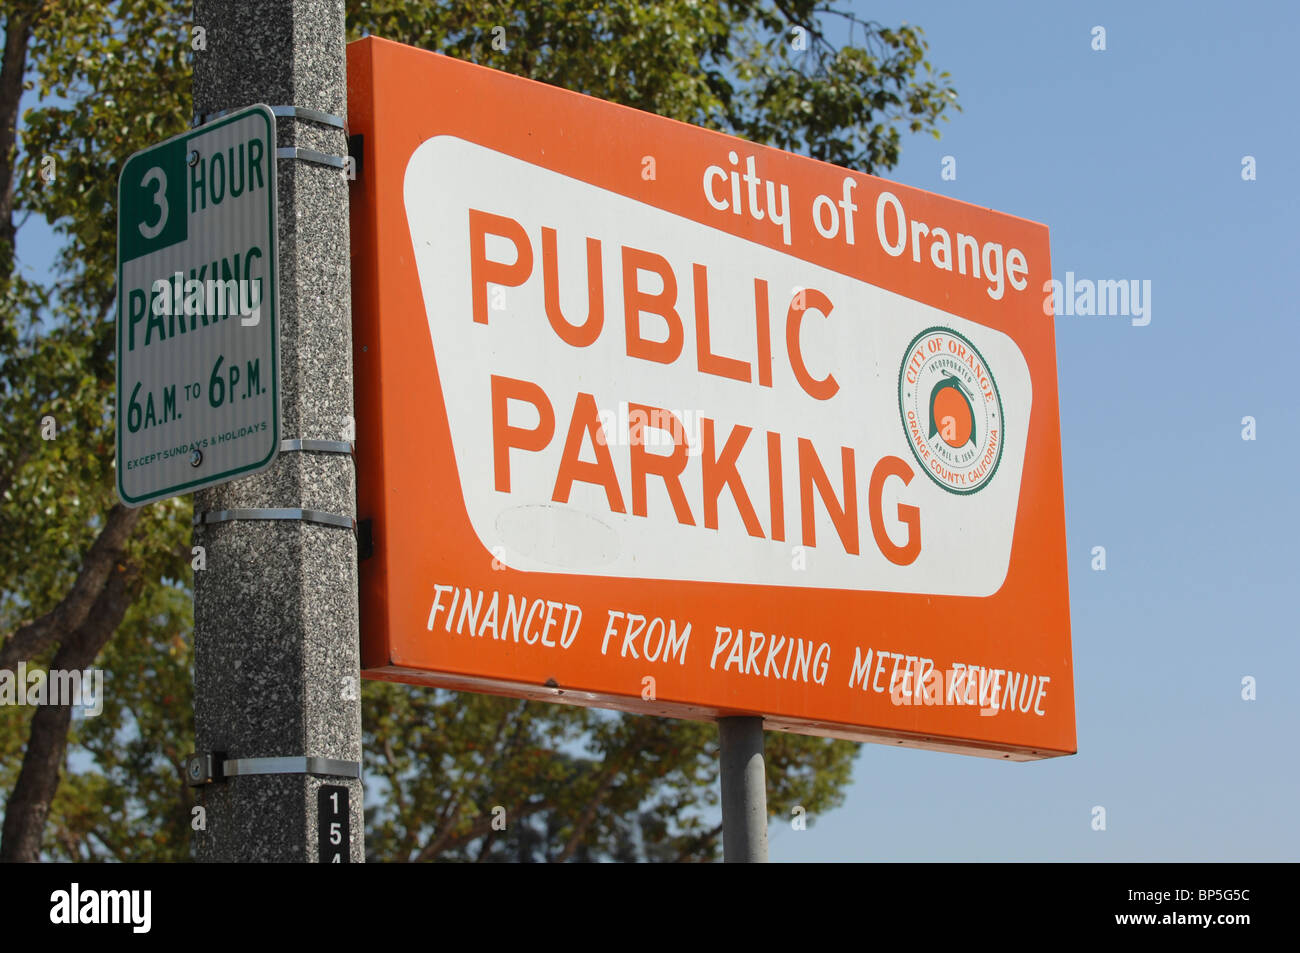 Public Parking in the City of Orange, CA Stock Photo